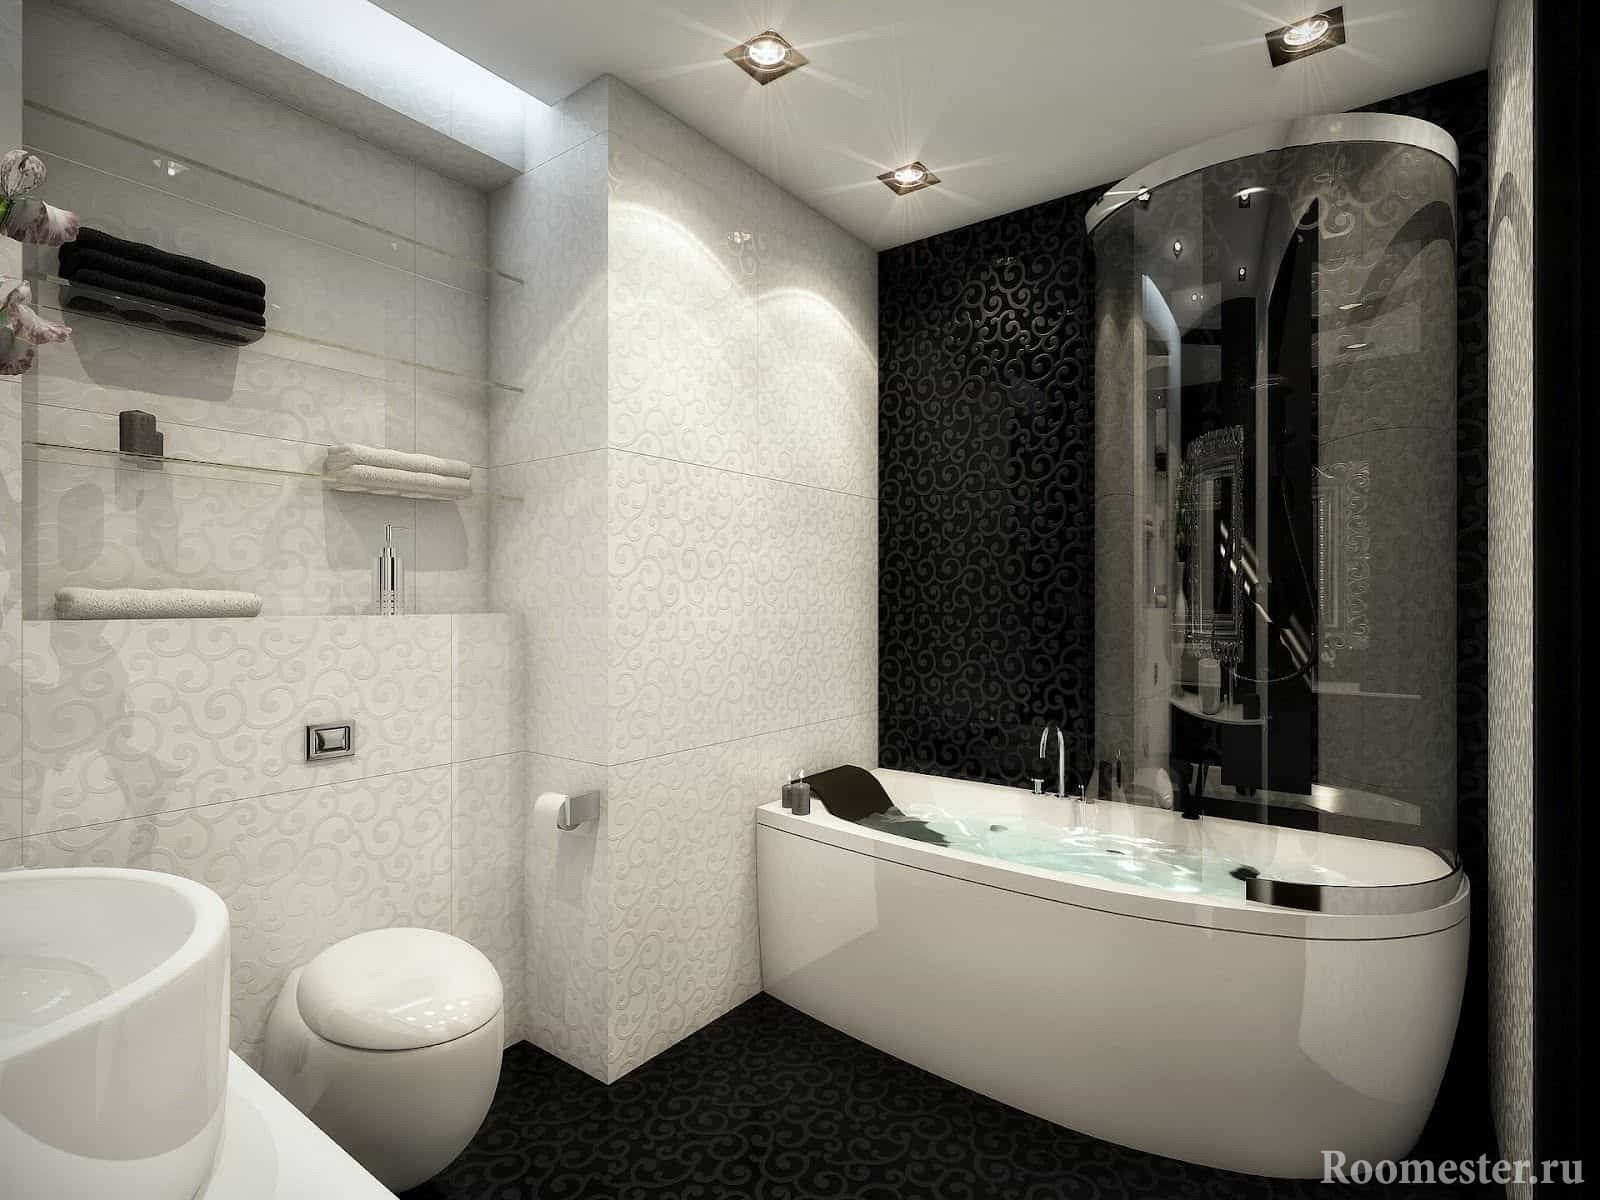 Ванная черная угловая. Ванная комната. Дизайнерская ванная комната. Ванная в черно белых тонах. Дизайн интерьера ванный комнаты.